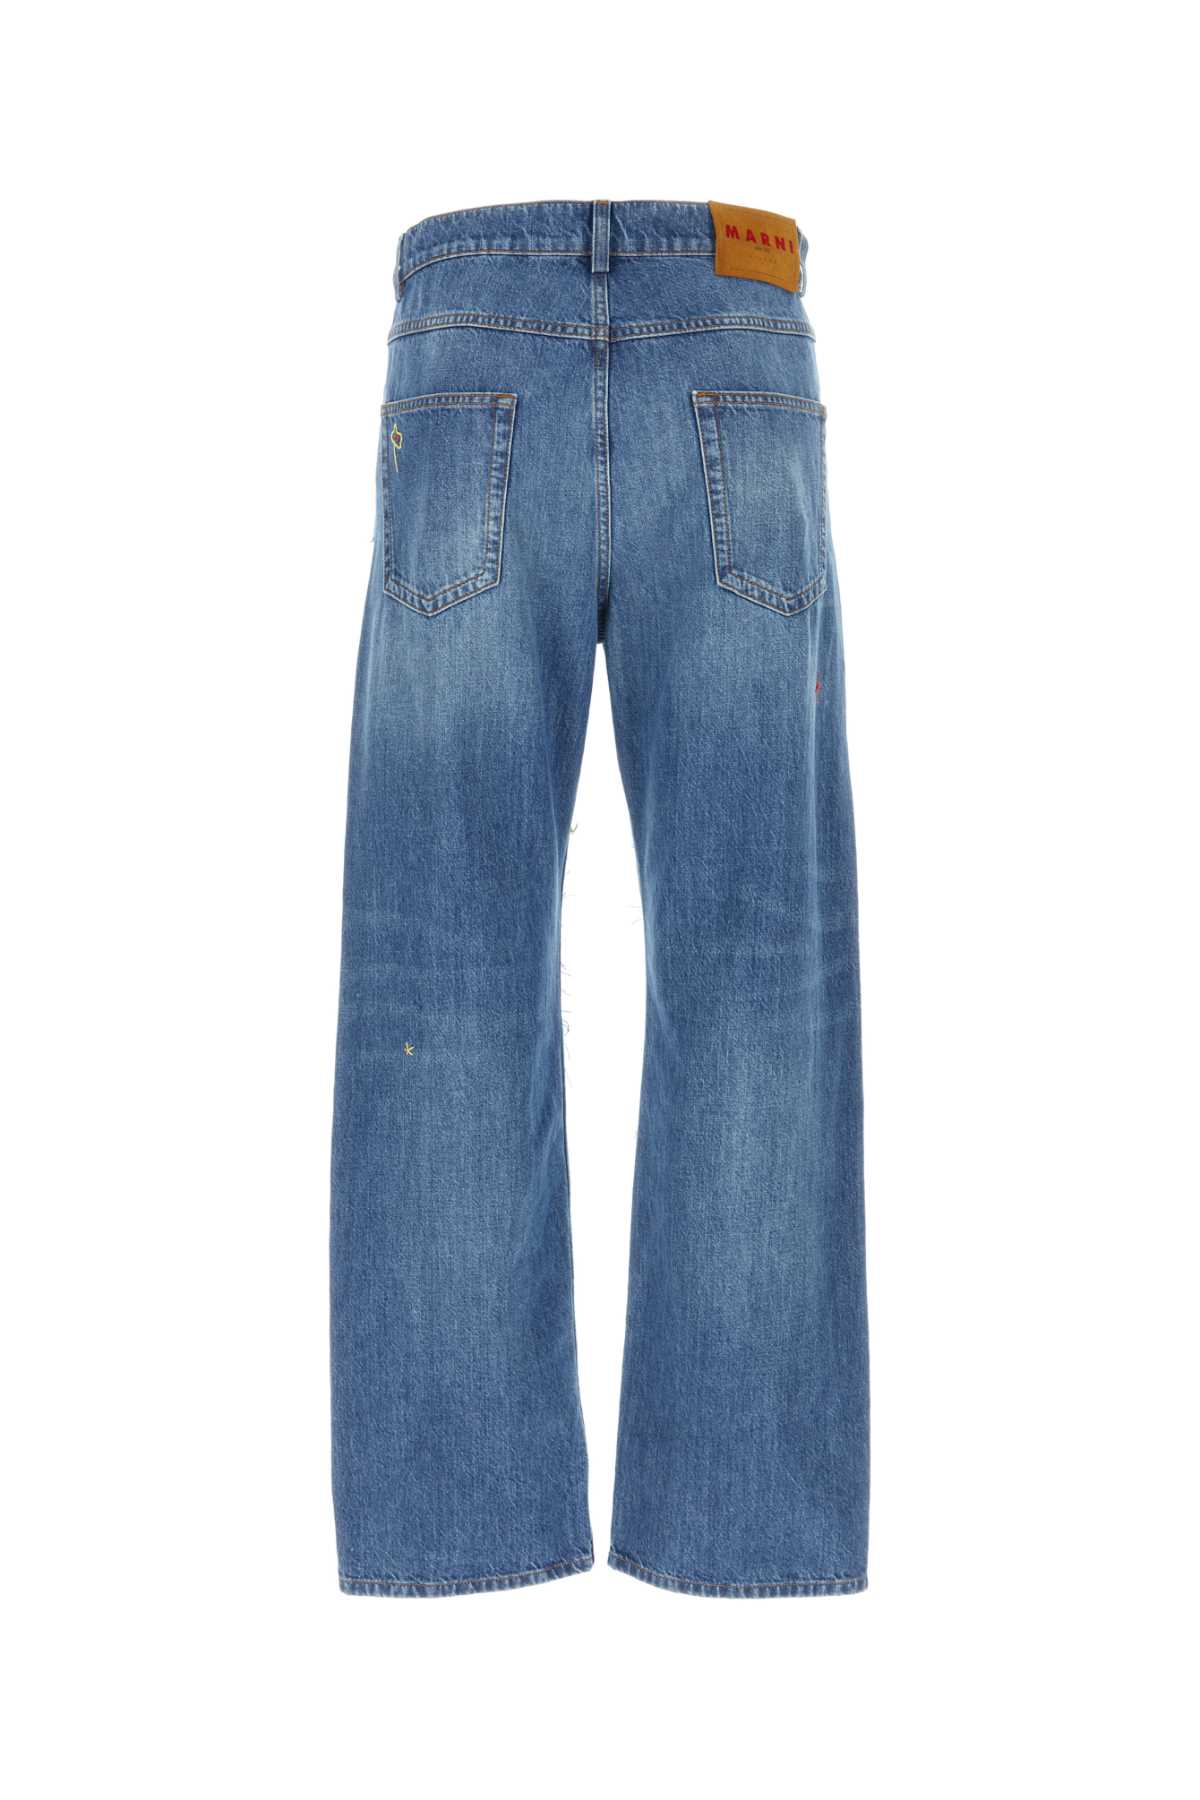 Marni Denim Jeans In Irisblue